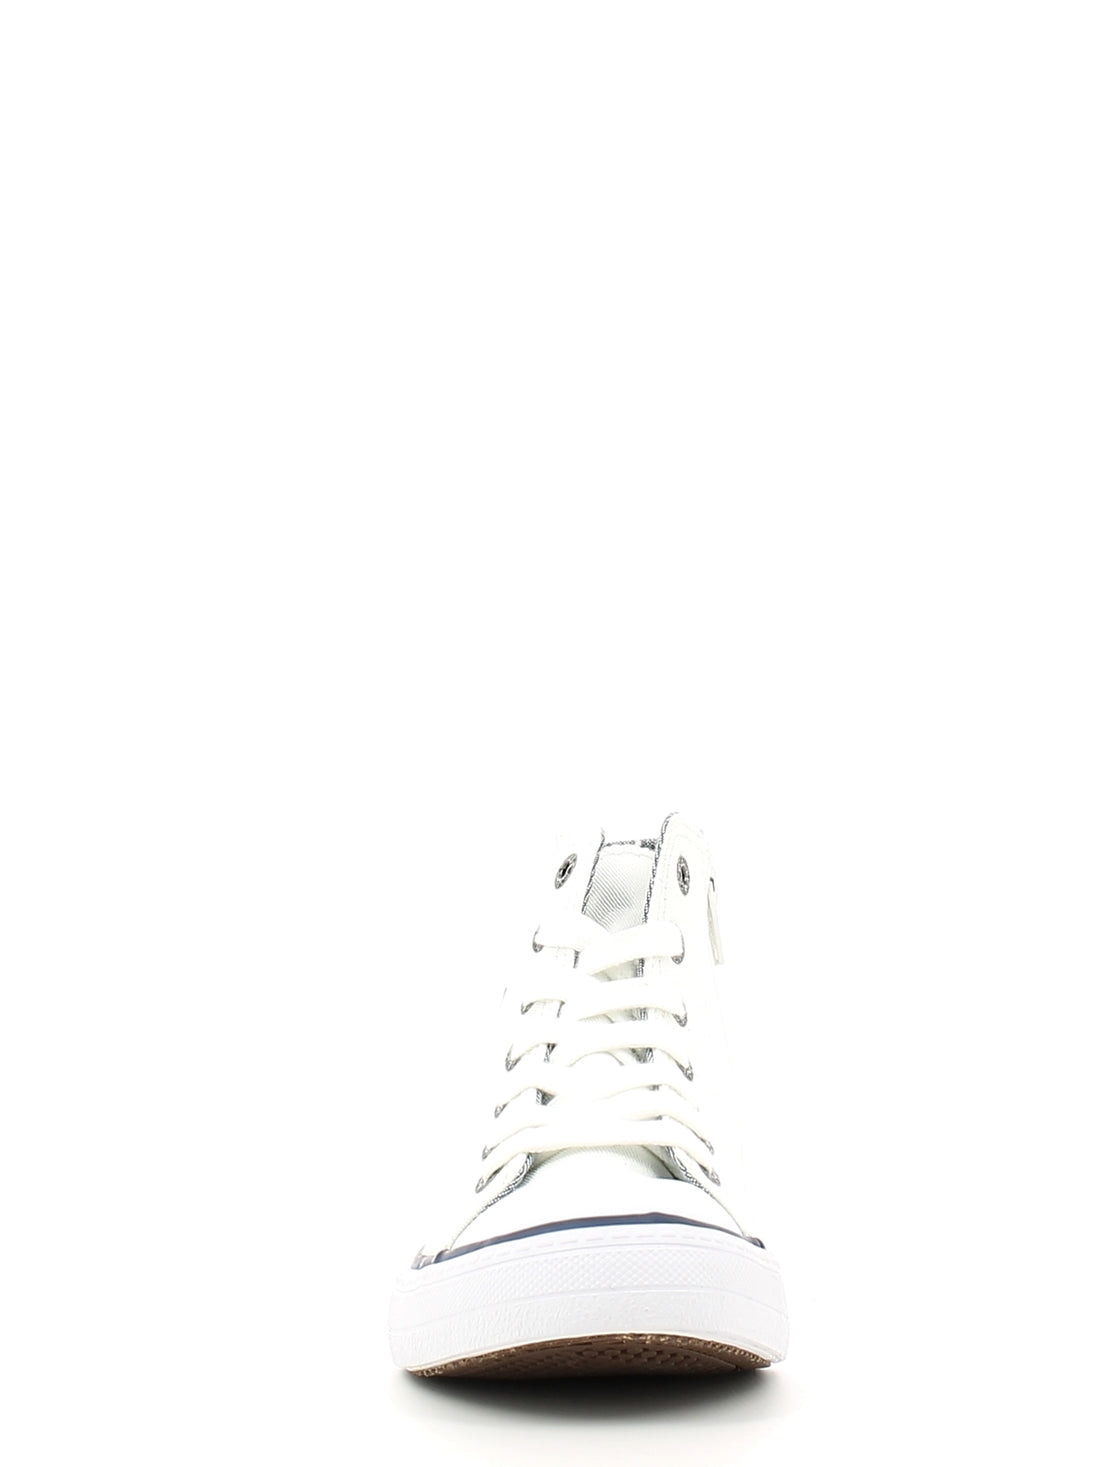 Sneakers Bianco Blaike